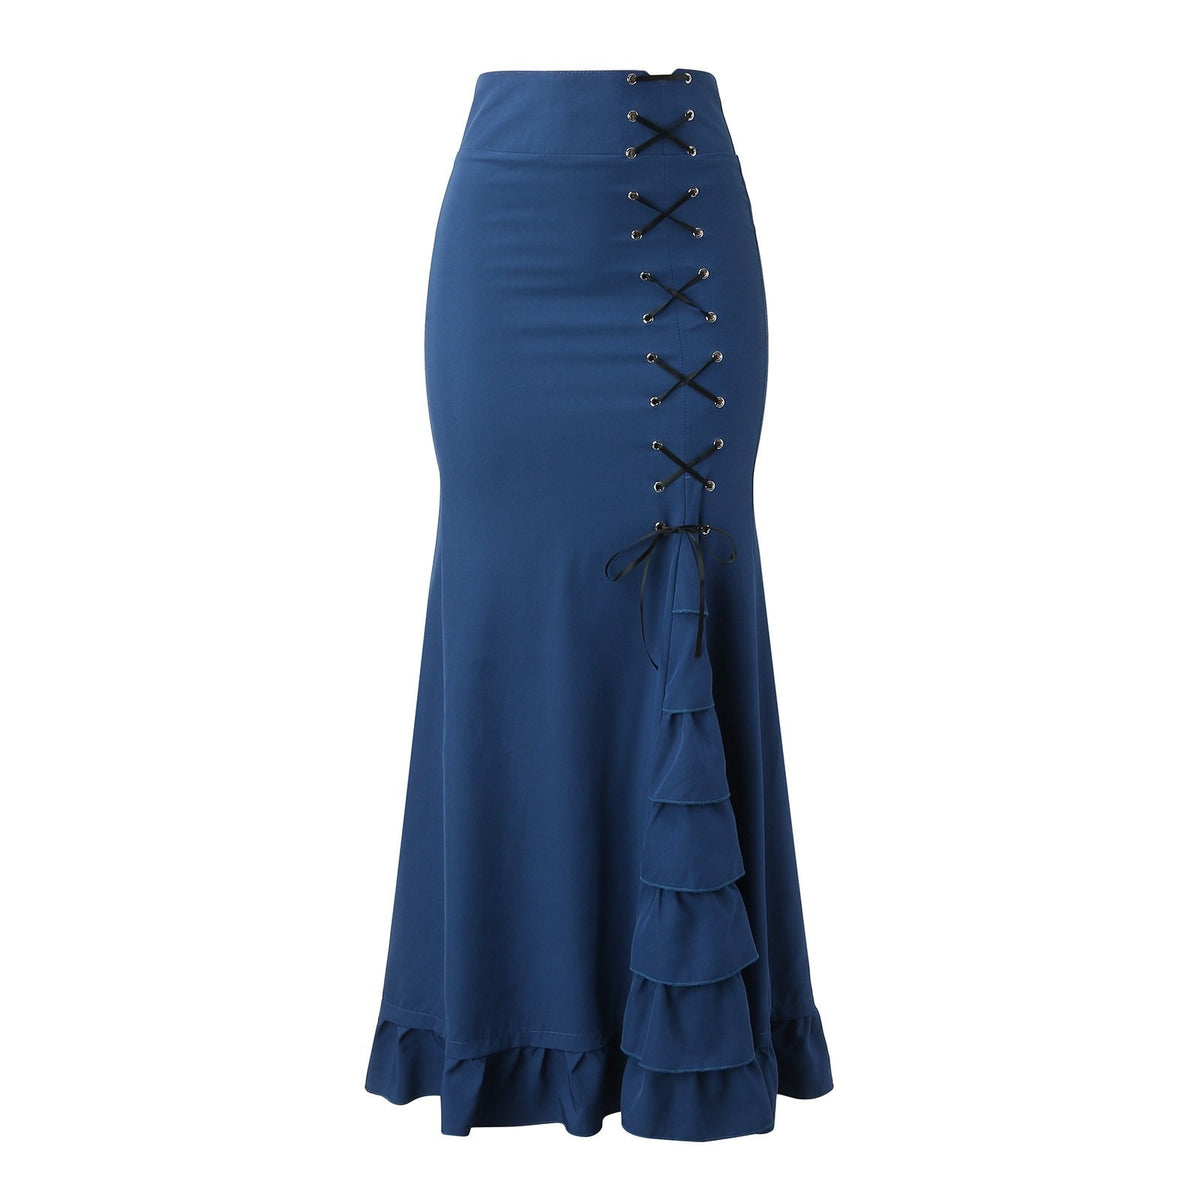 Mermaid Steampunk skirt | My Steampunk Style – my-steampunk-style